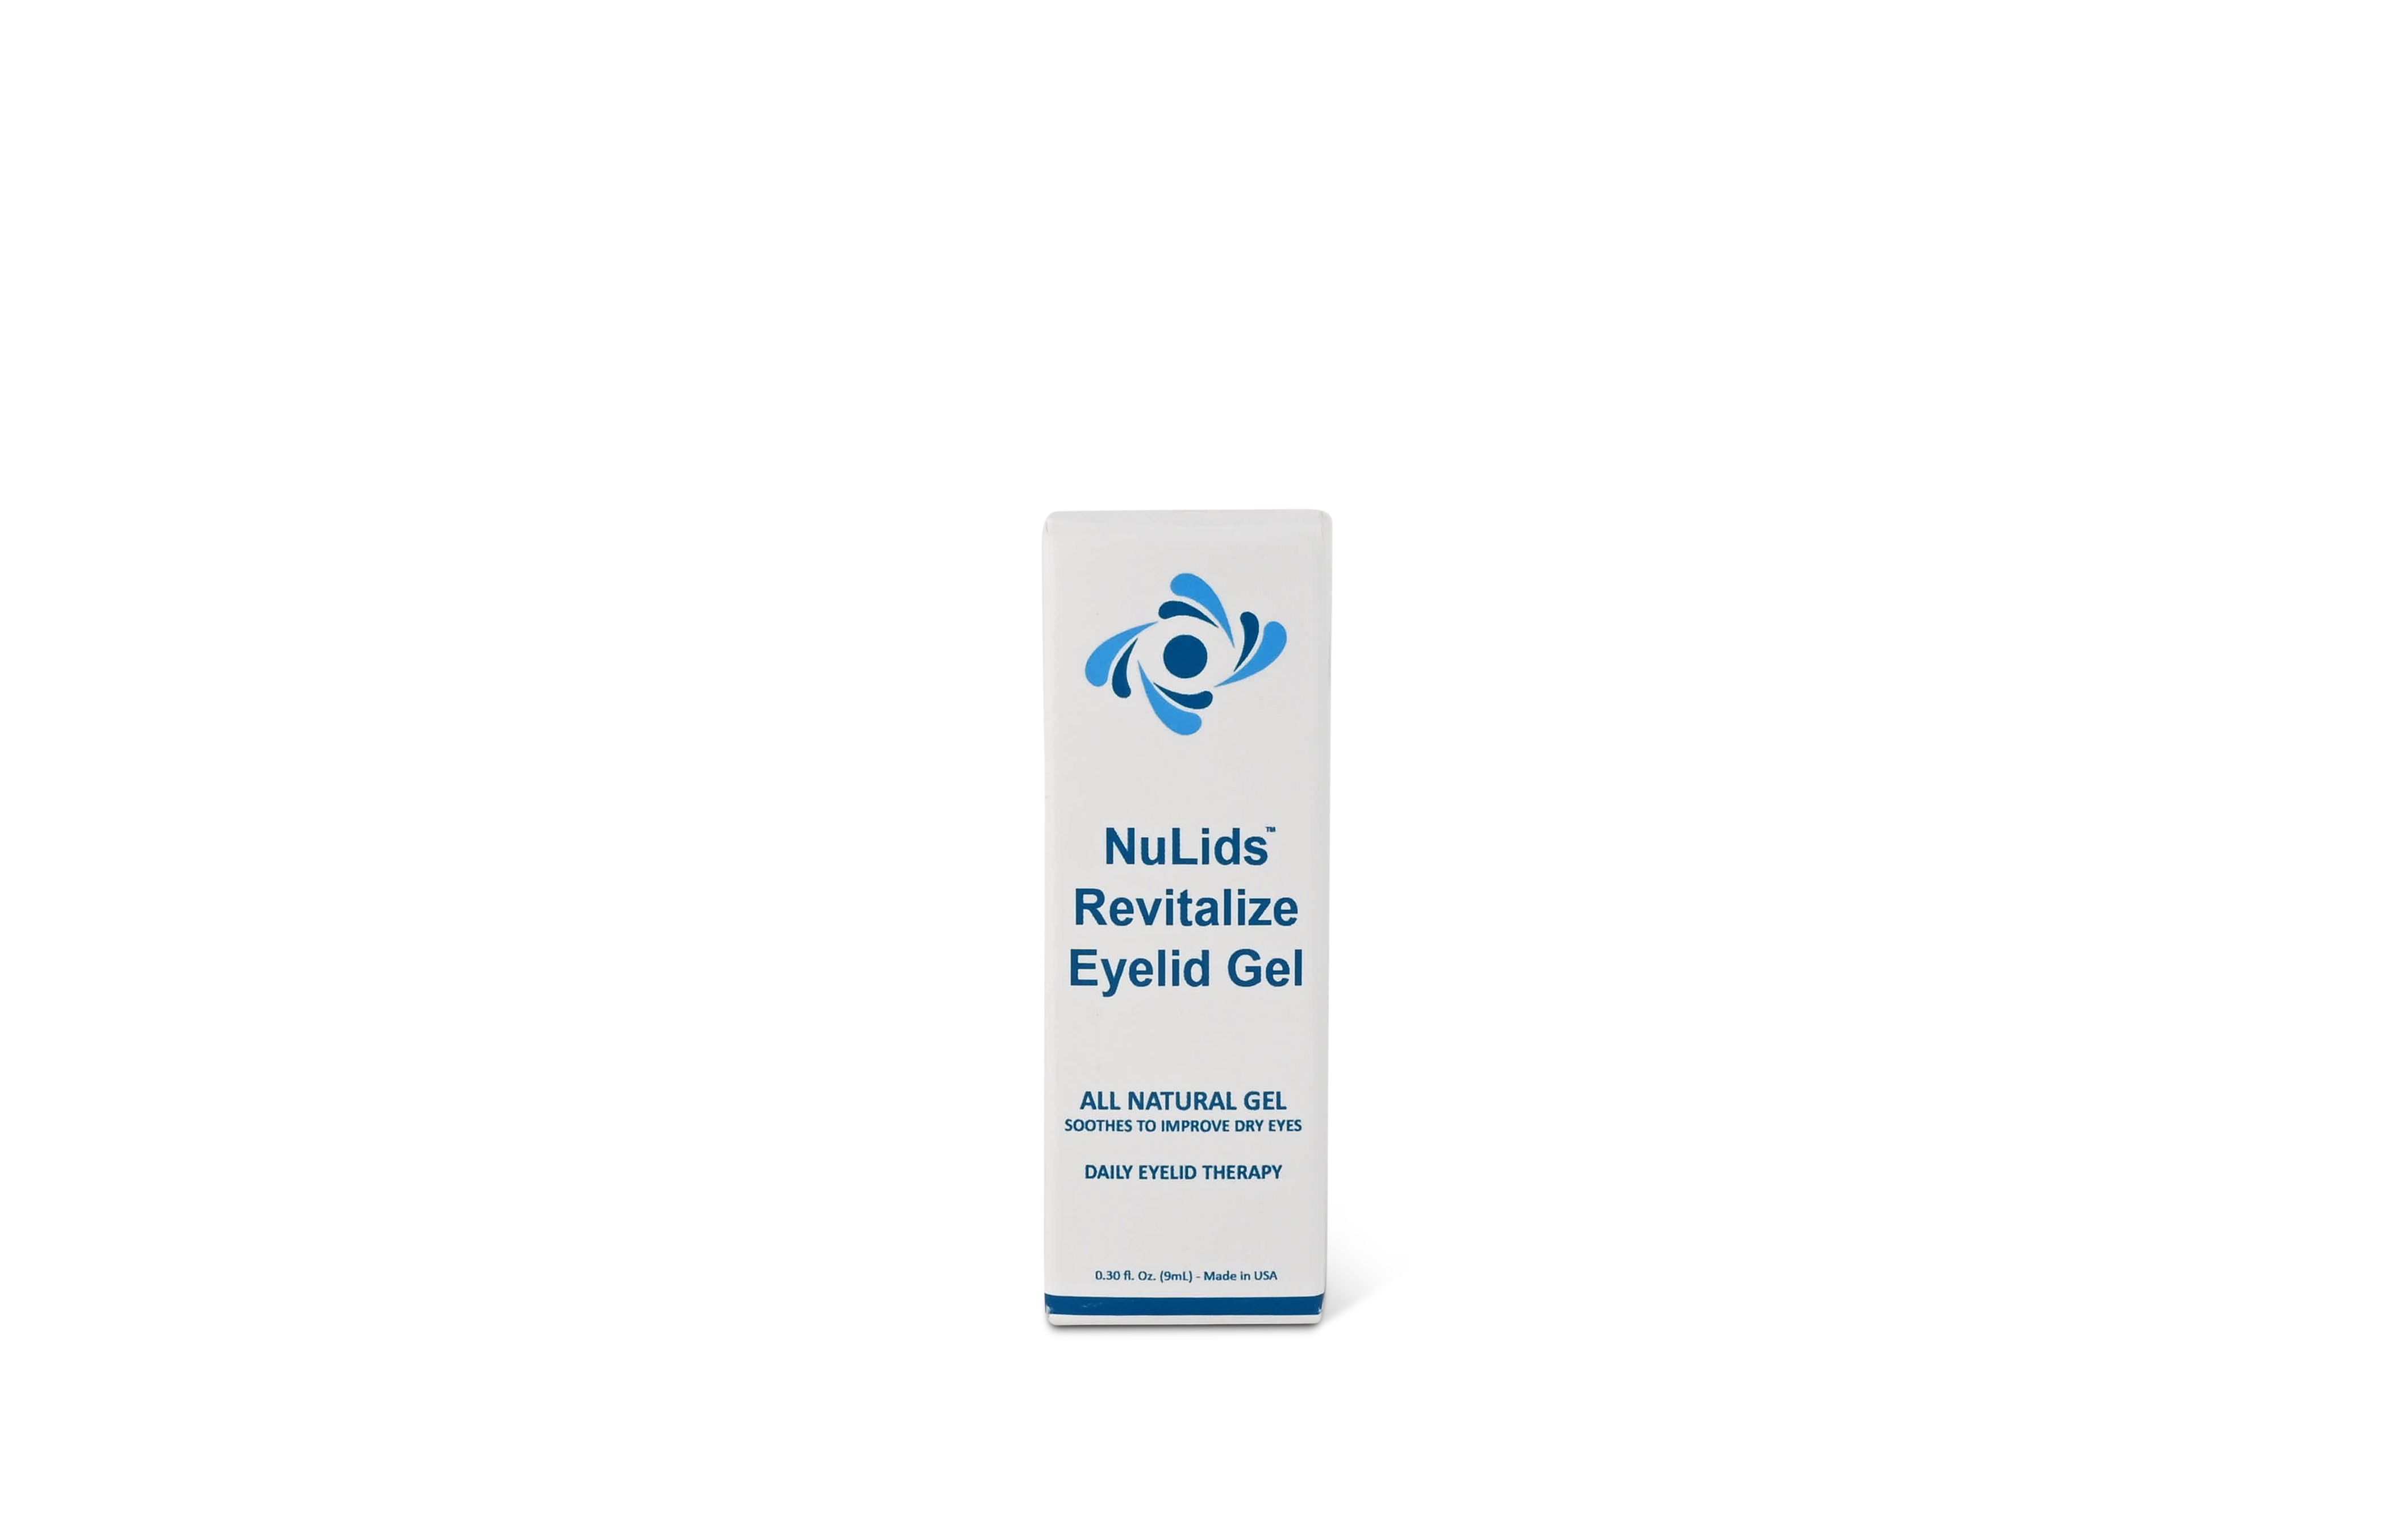 NuLids Revitalize Eyelid Gel